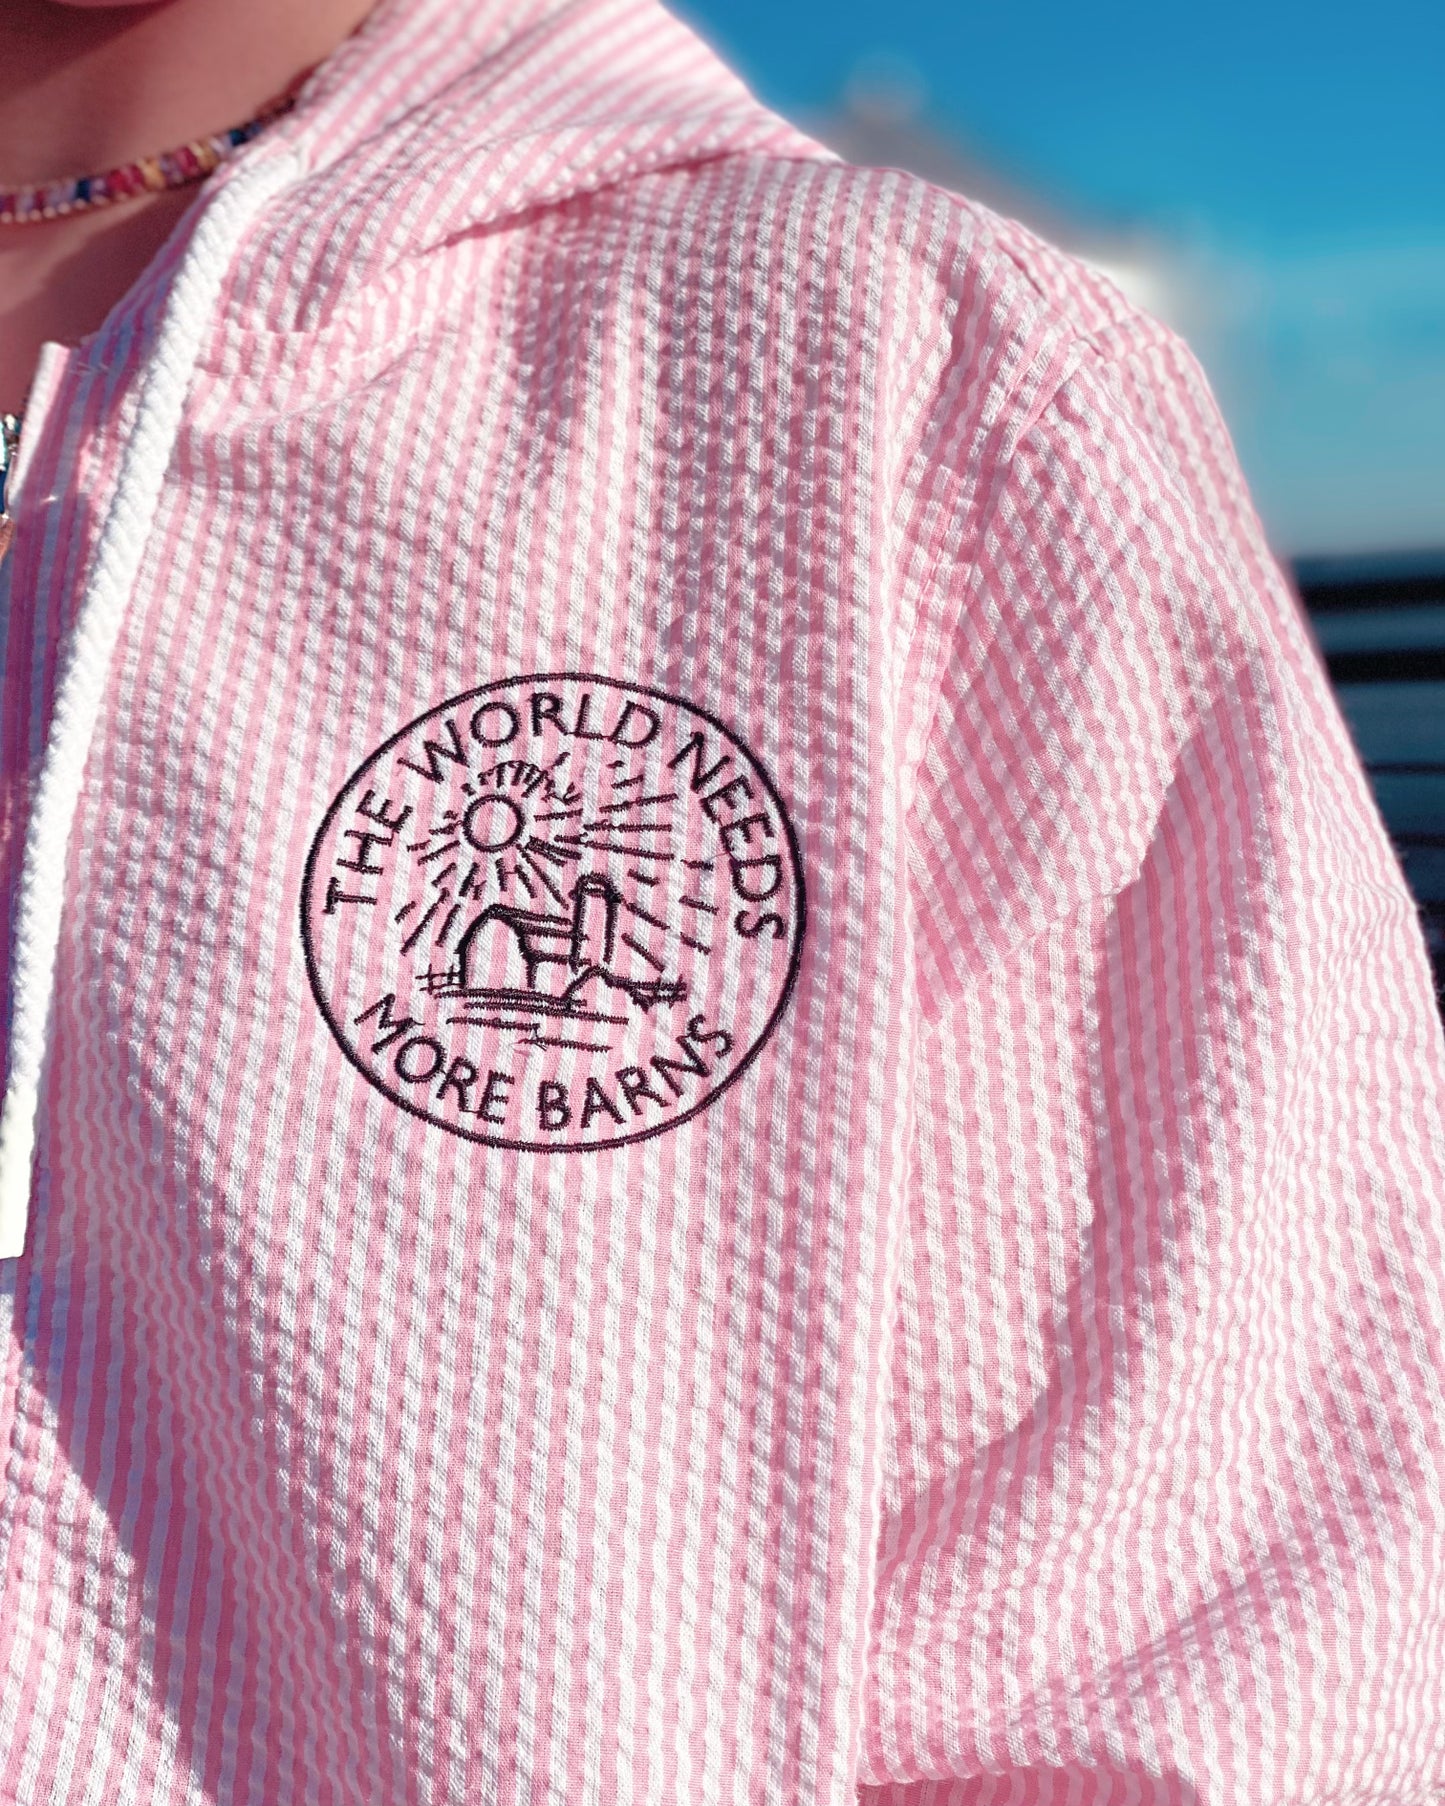 Pink Stripe Pullover - Ladies (More Barns)